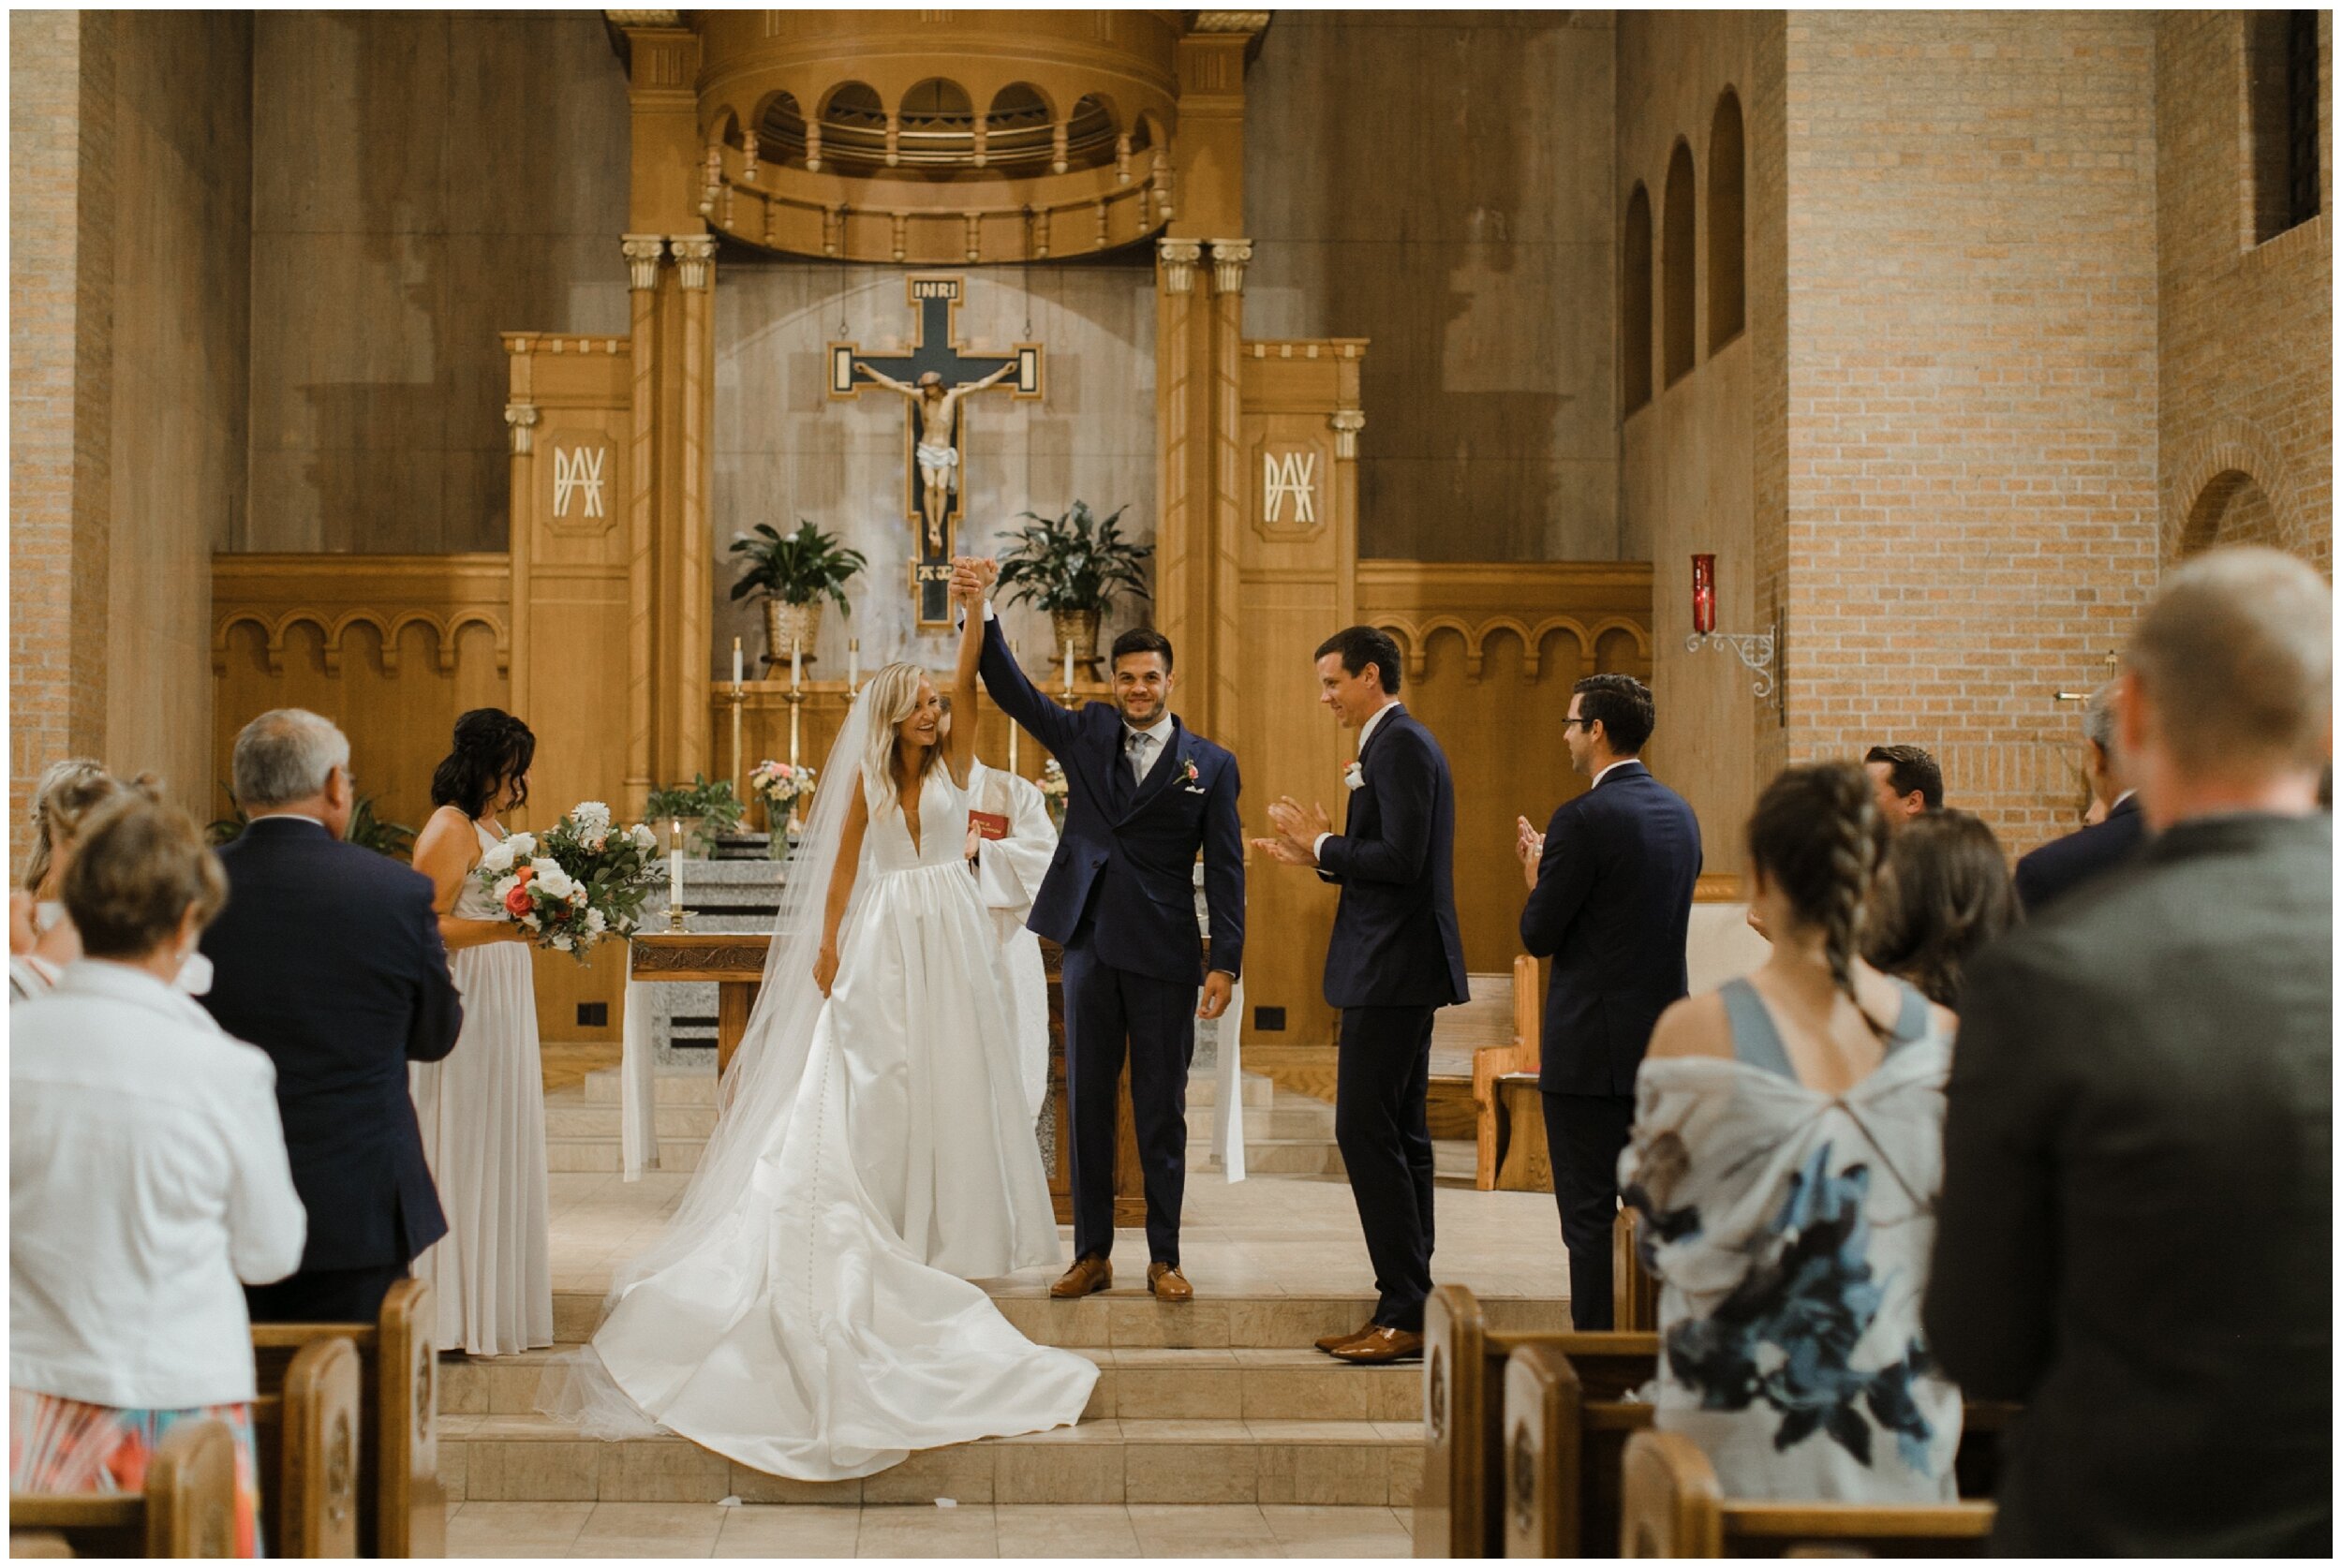 Traditional catholic wedding ceremony in Brainerd Minnesota